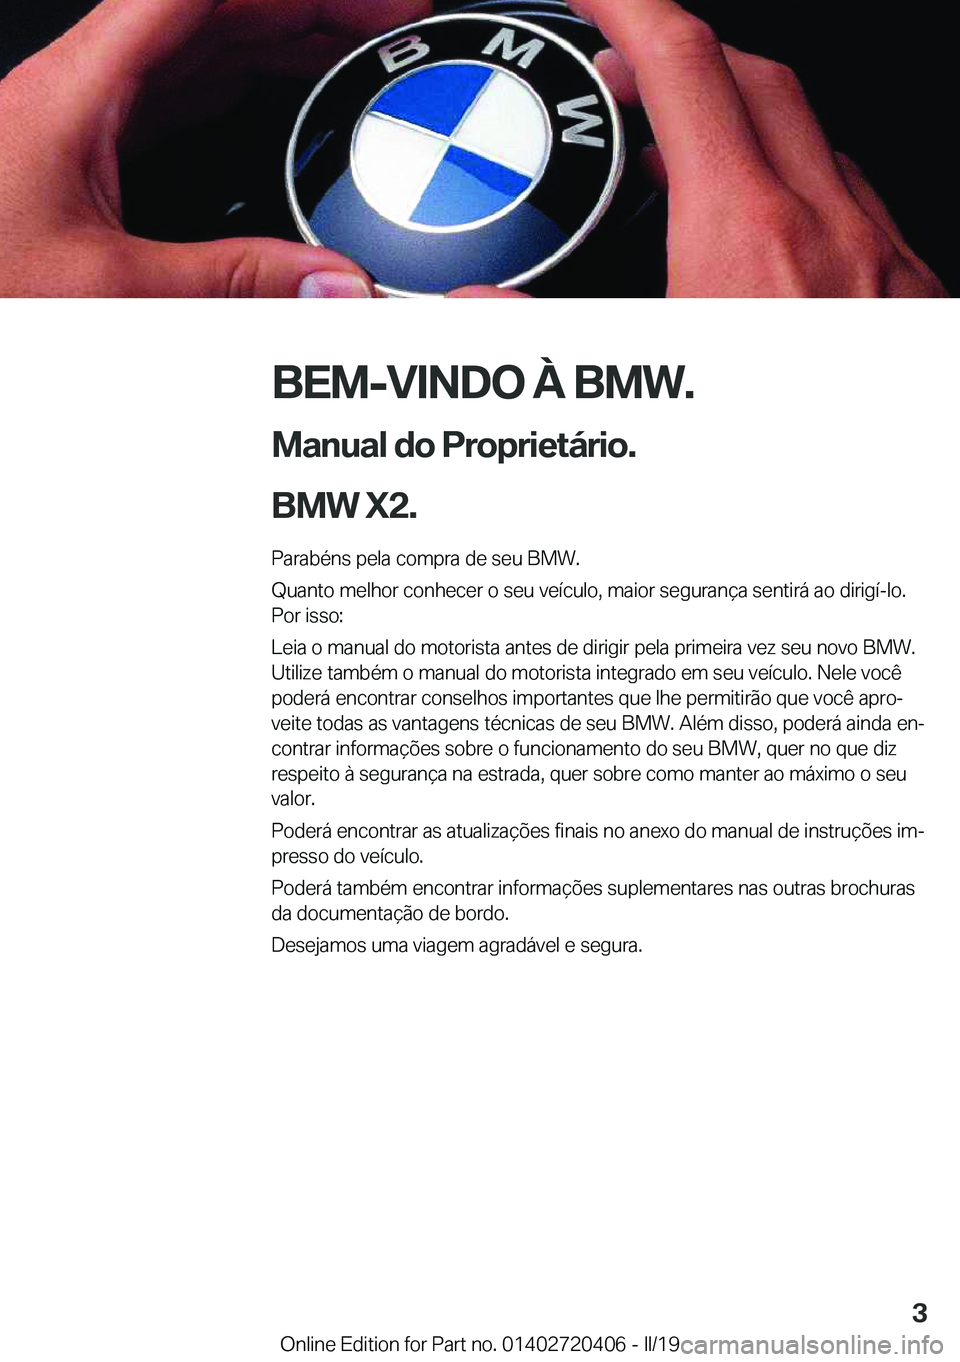 BMW X2 2019  Manual do condutor (in Portuguese) �B�E�M�-�V�I�N�D�O��À��B�M�W�.
�M�a�n�u�a�l��d�o��P�r�o�p�r�i�e�t�á�r�i�o�.
�B�M�W��X�2�. �P�a�r�a�b�é�n�s��p�e�l�a��c�o�m�p�r�a��d�e��s�e�u��B�M�W�.
�Q�u�a�n�t�o��m�e�l�h�o�r��c�o�n�h�